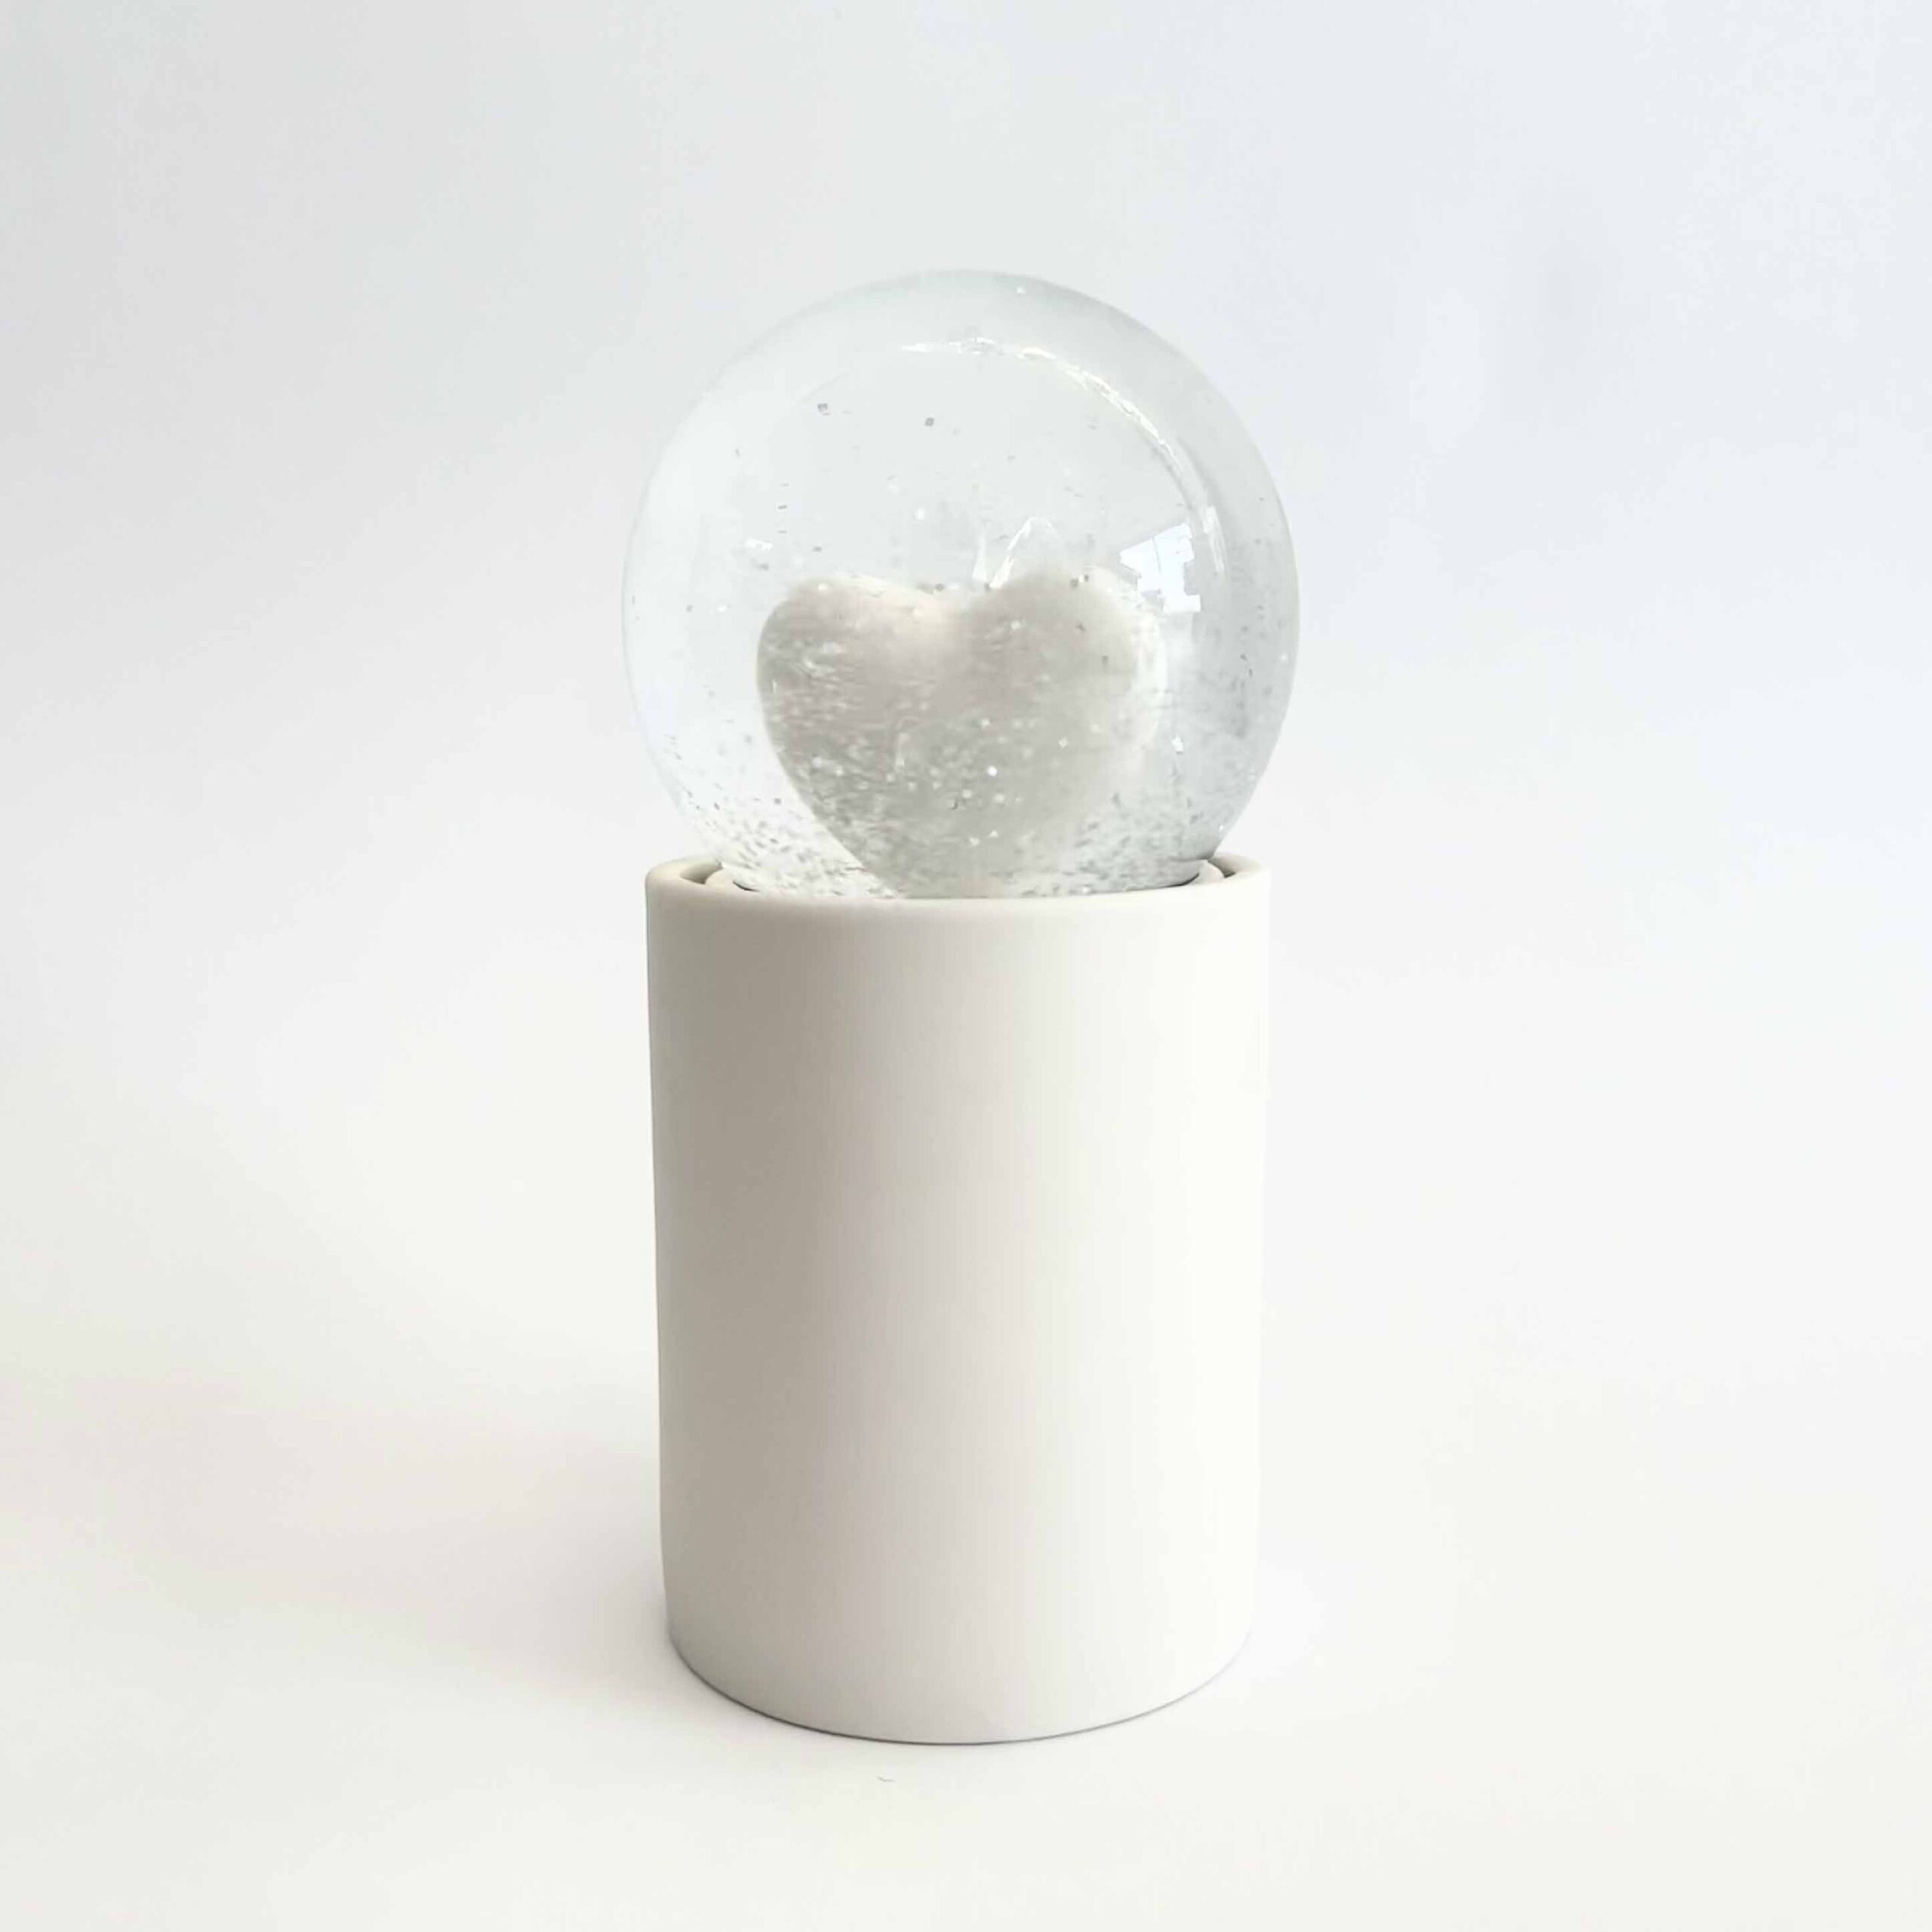 BYE Heart Globe design urn